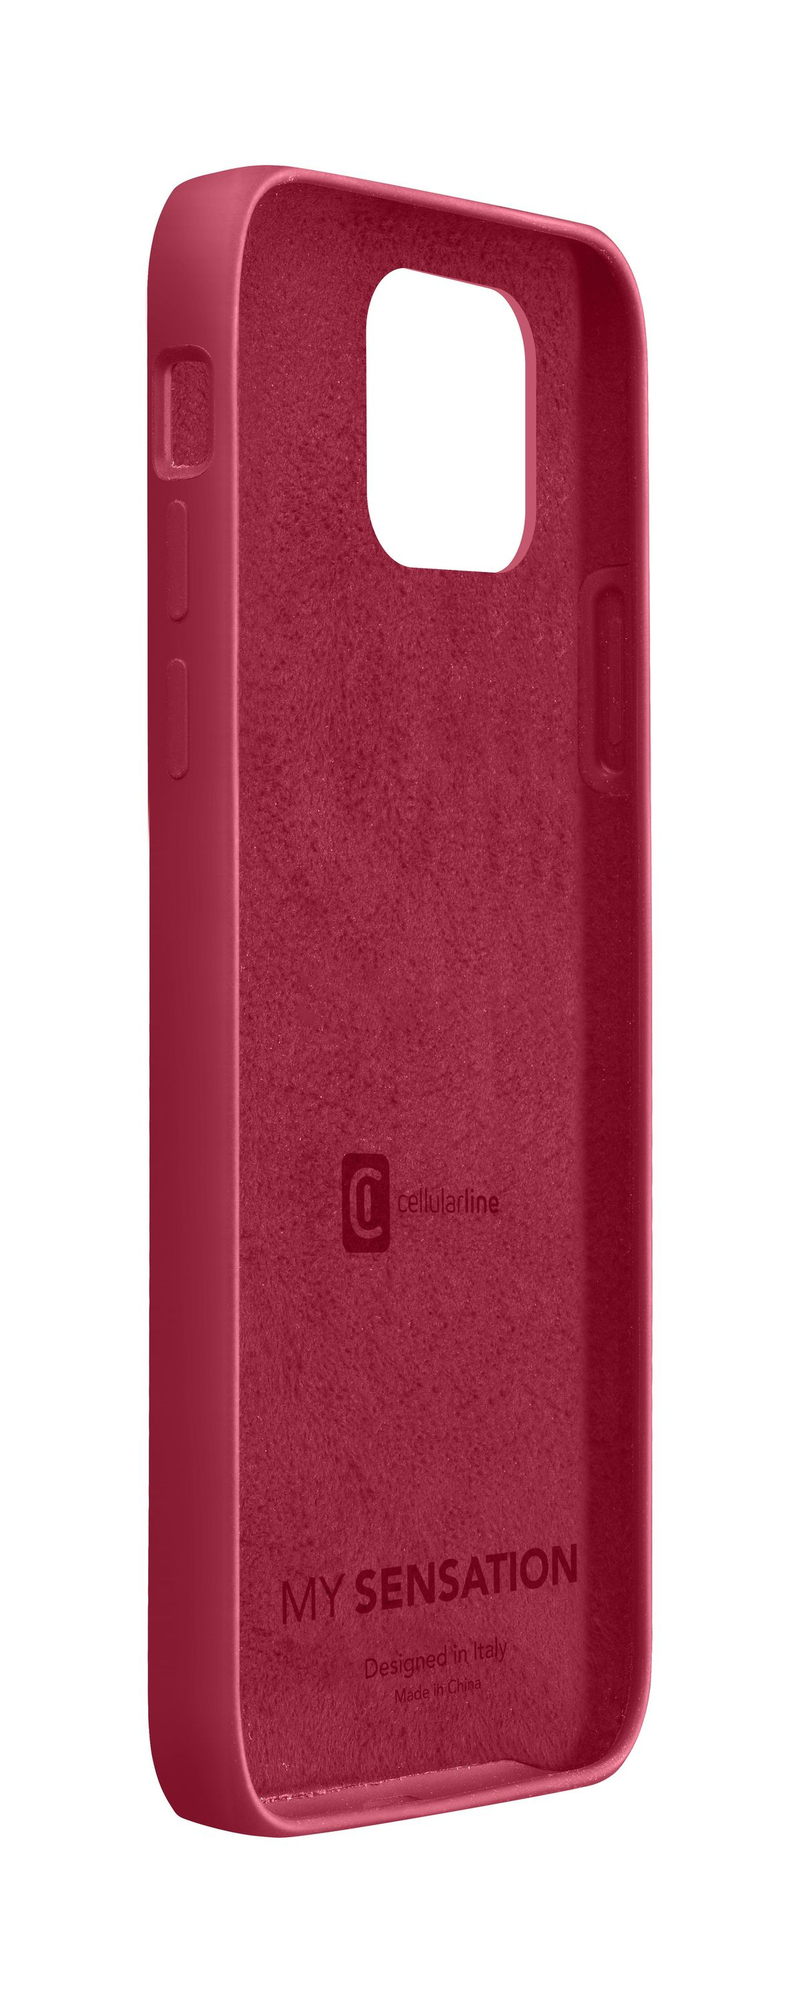 Cellularline Back Cover Sensation Red For iPhone 12 Mini